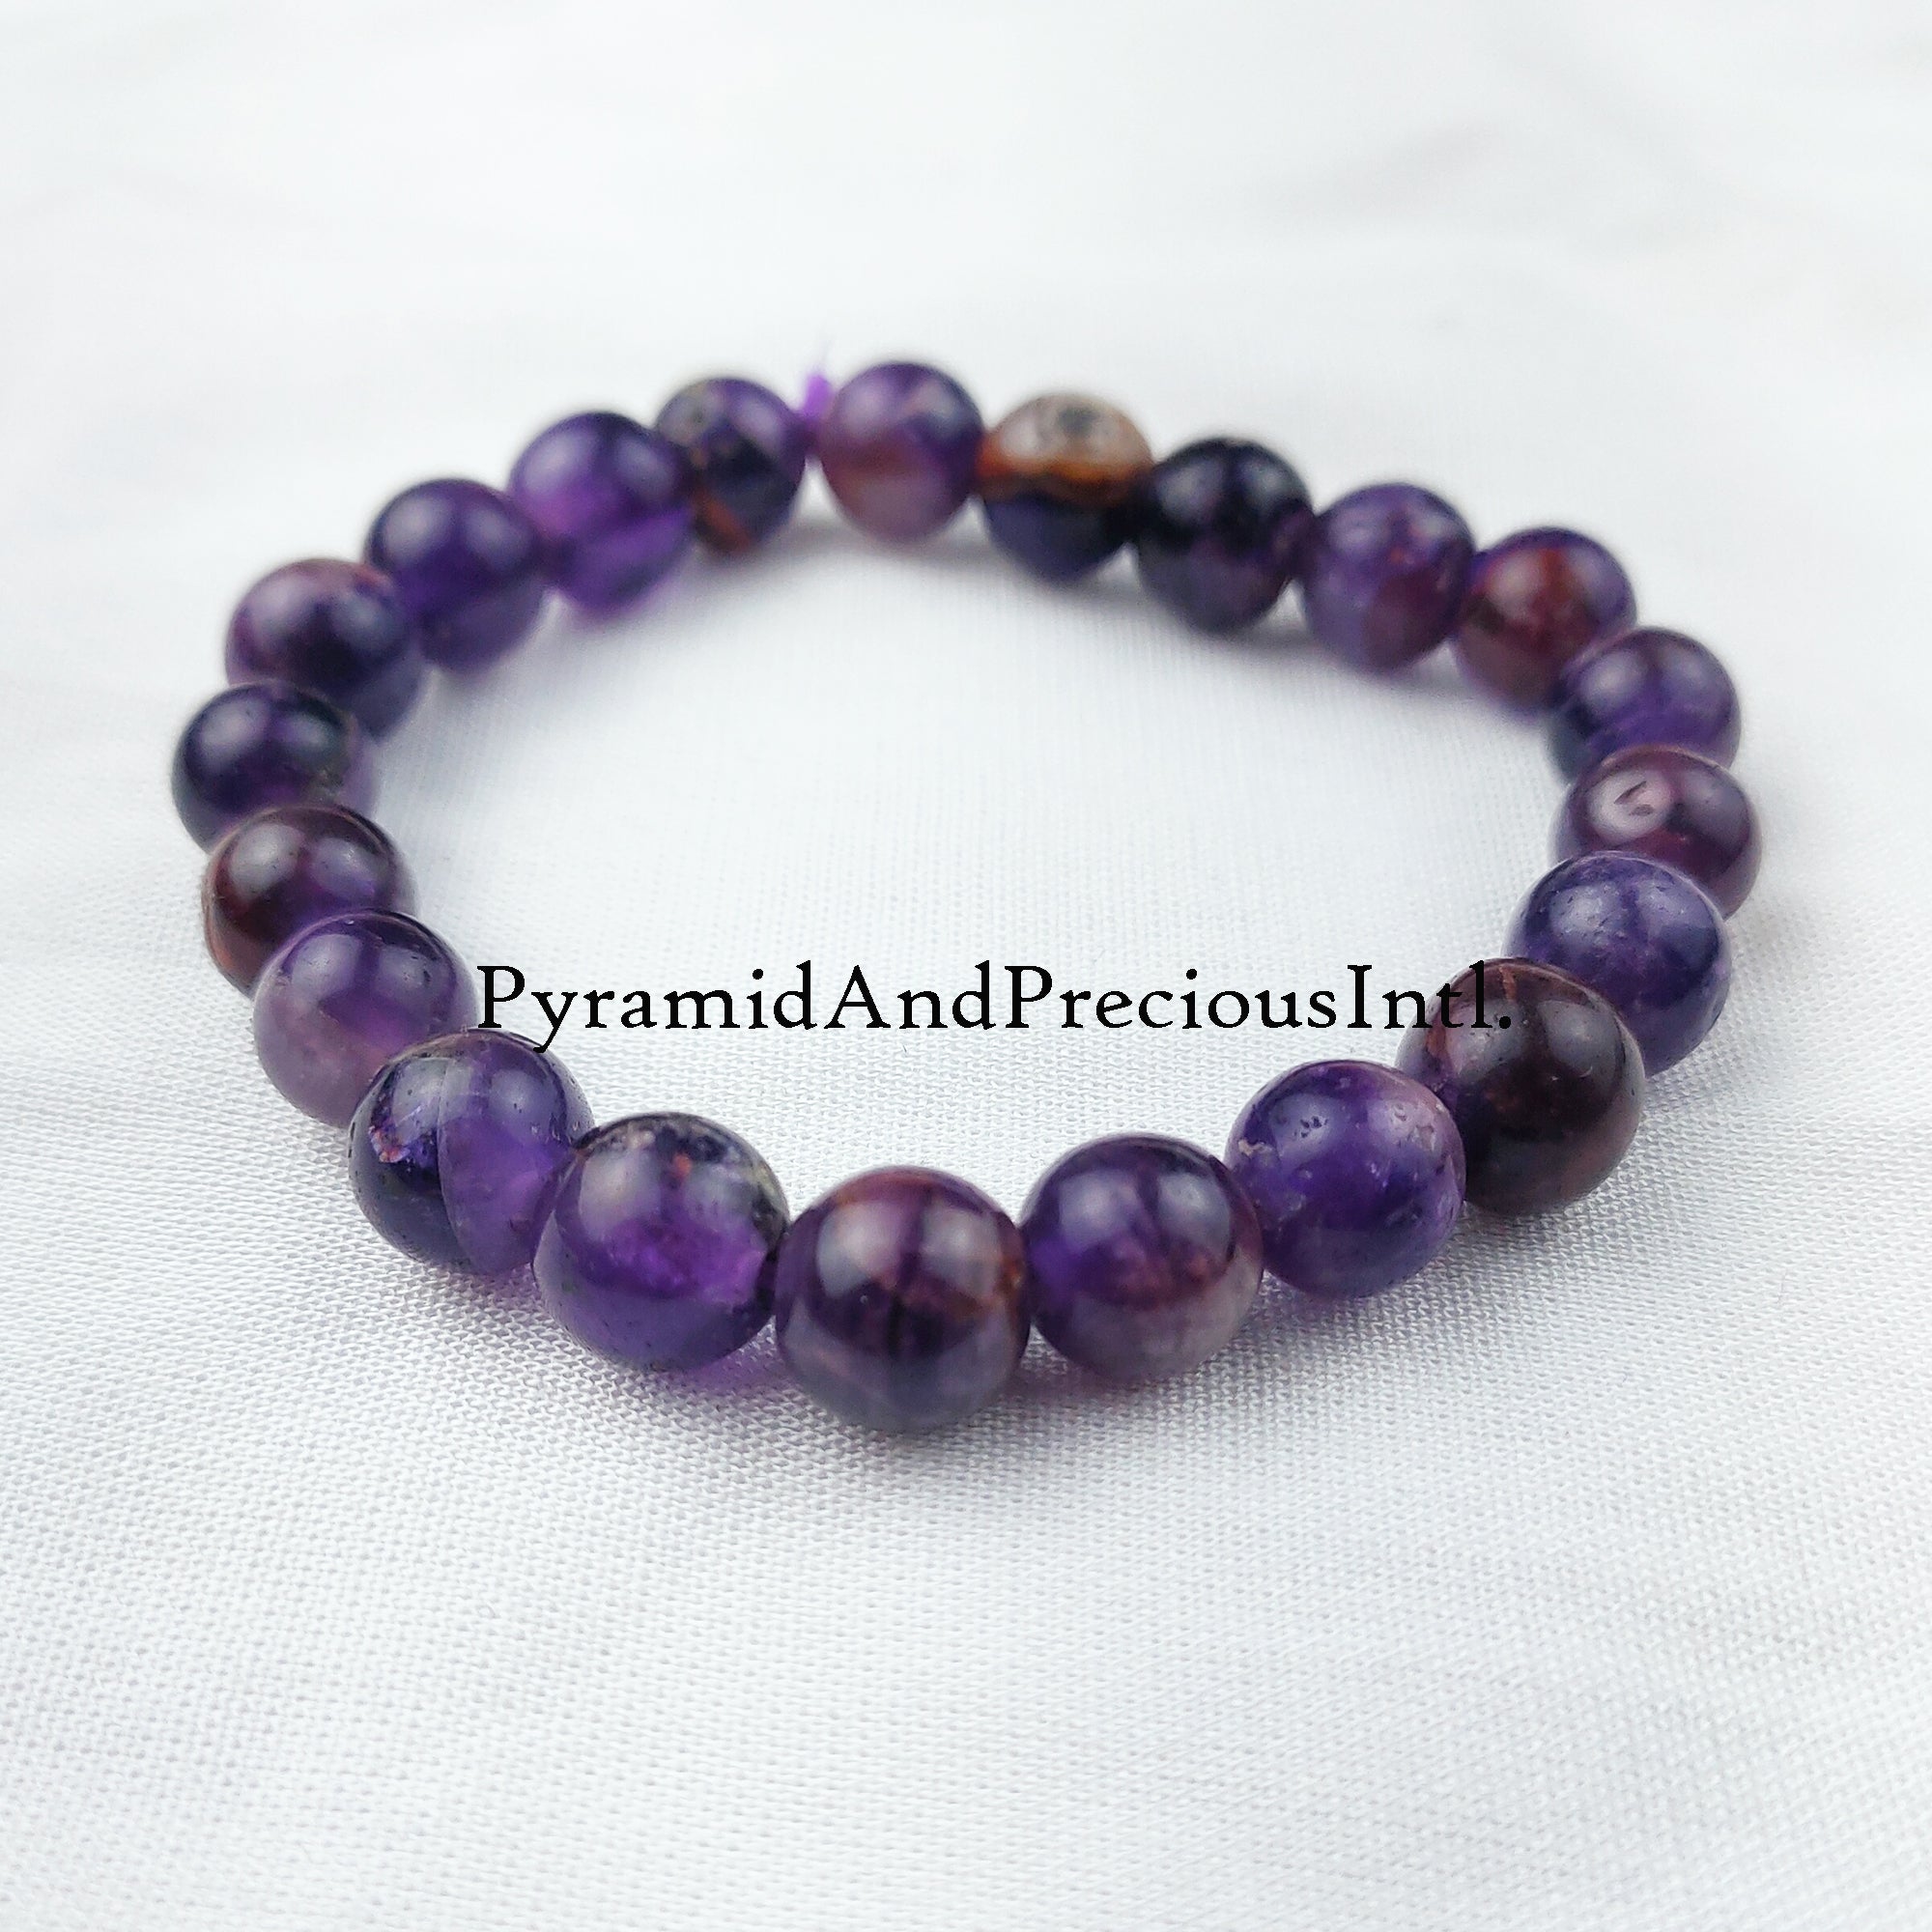 Natural Amethyst Gemstone Healing Bracelet, Spiritual Protection Balance Meditation Grounding Bracelet